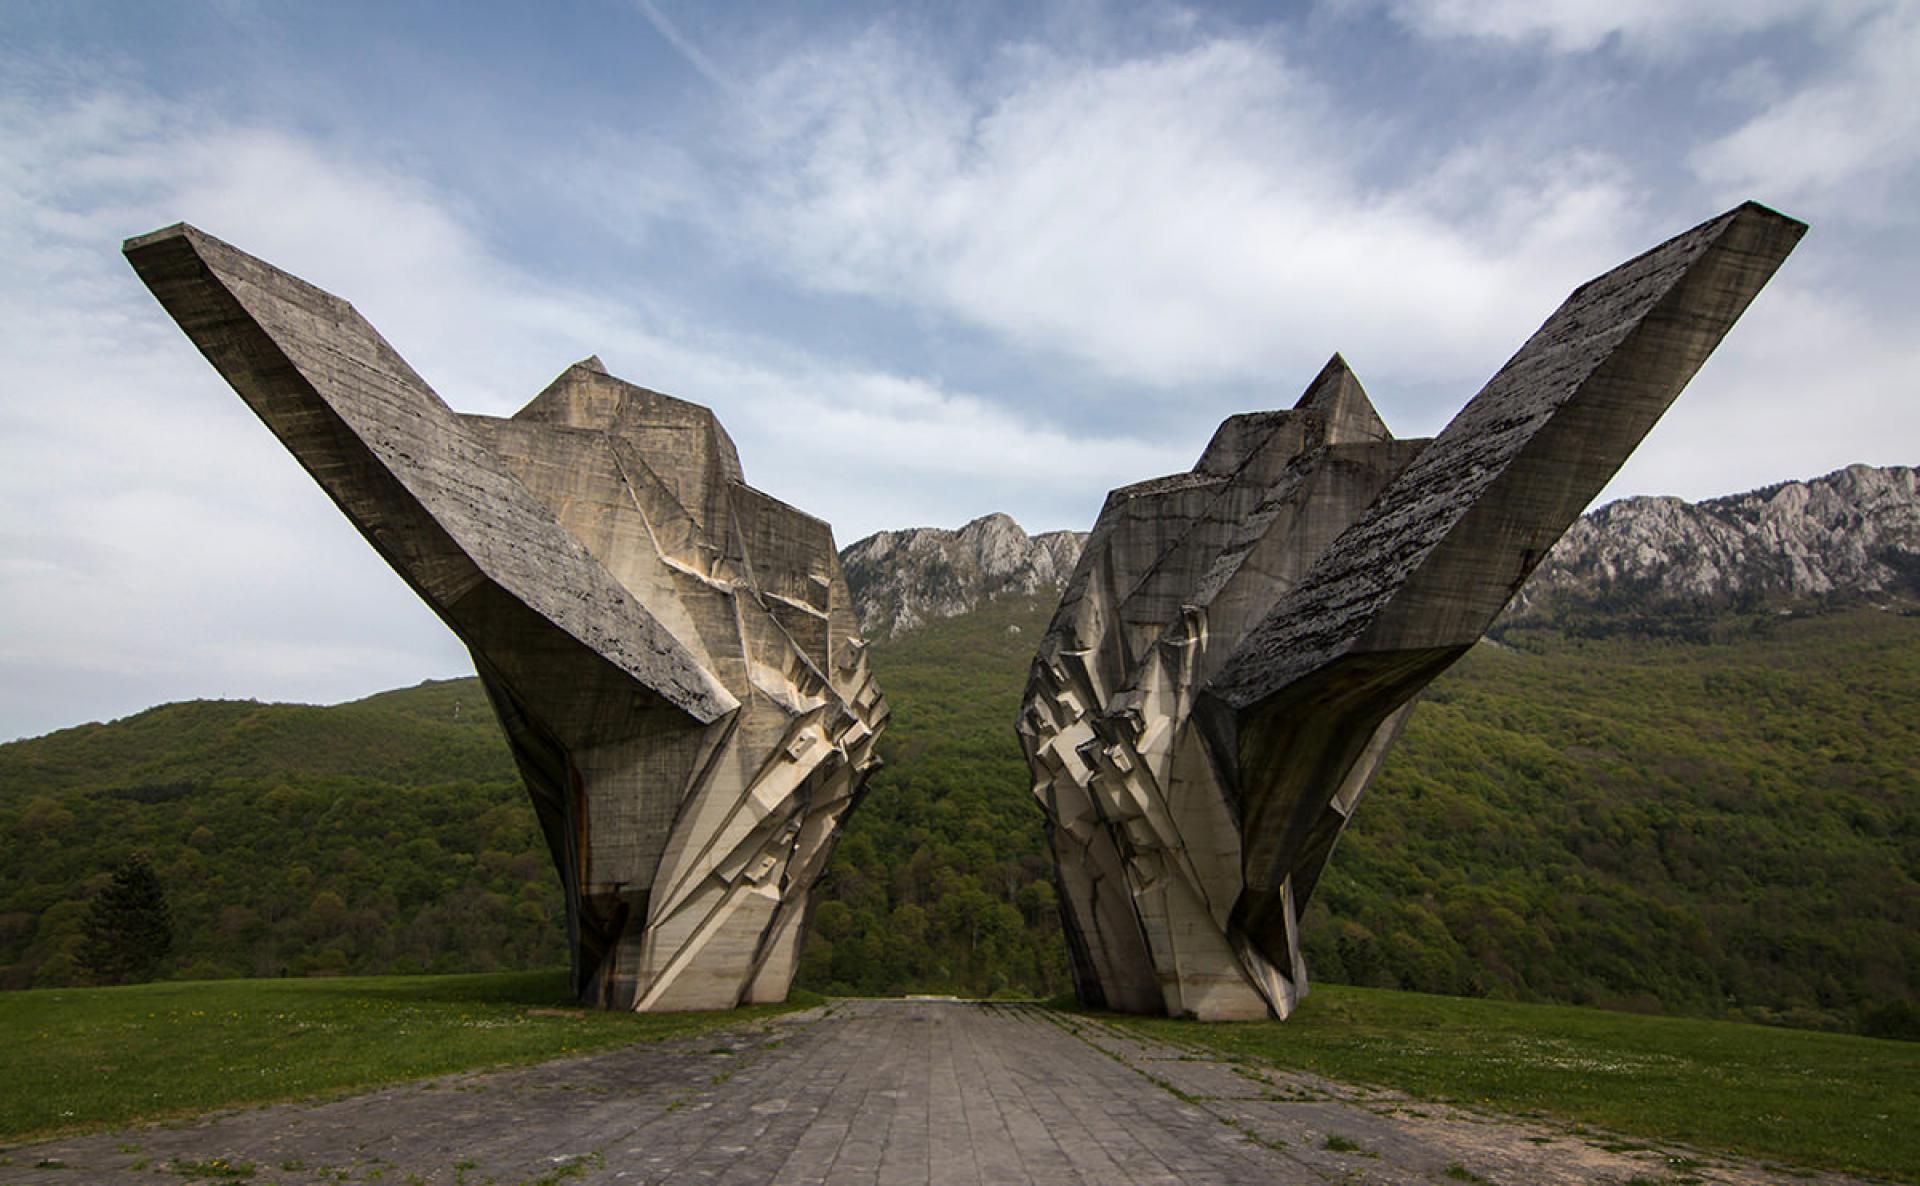 In the Valley of Heroes at Tjentište Živković and Radovic designed the monument commemorating the 1943 Battle of Sutjeska. | Photo via The Bohemian Blog